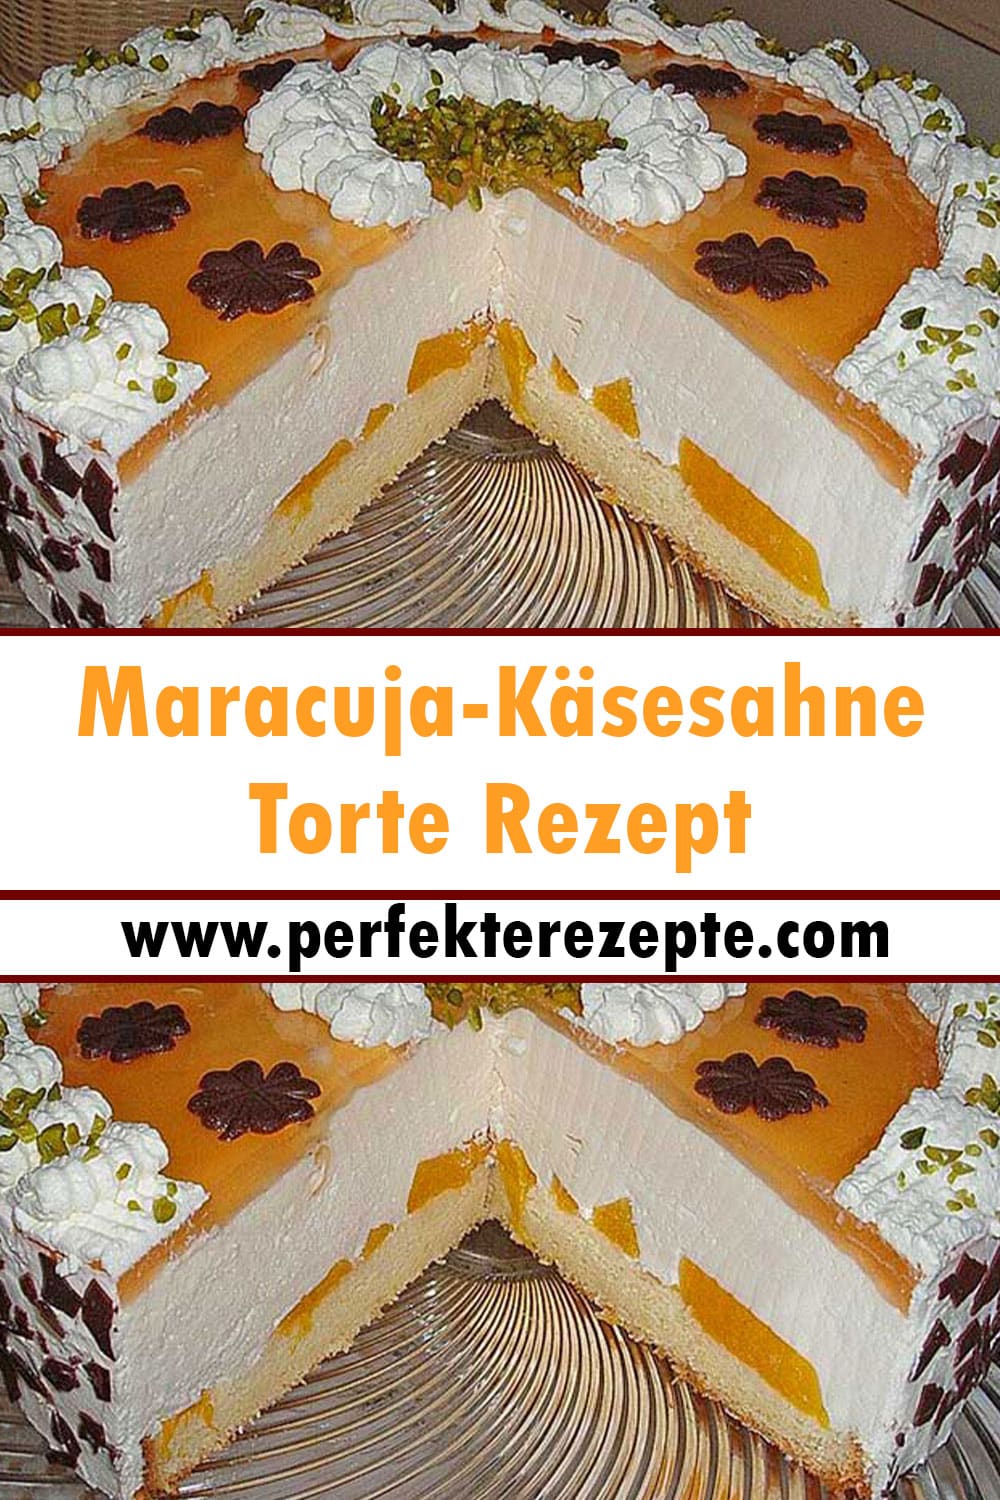 Maracuja-Käsesahne Torte Rezept